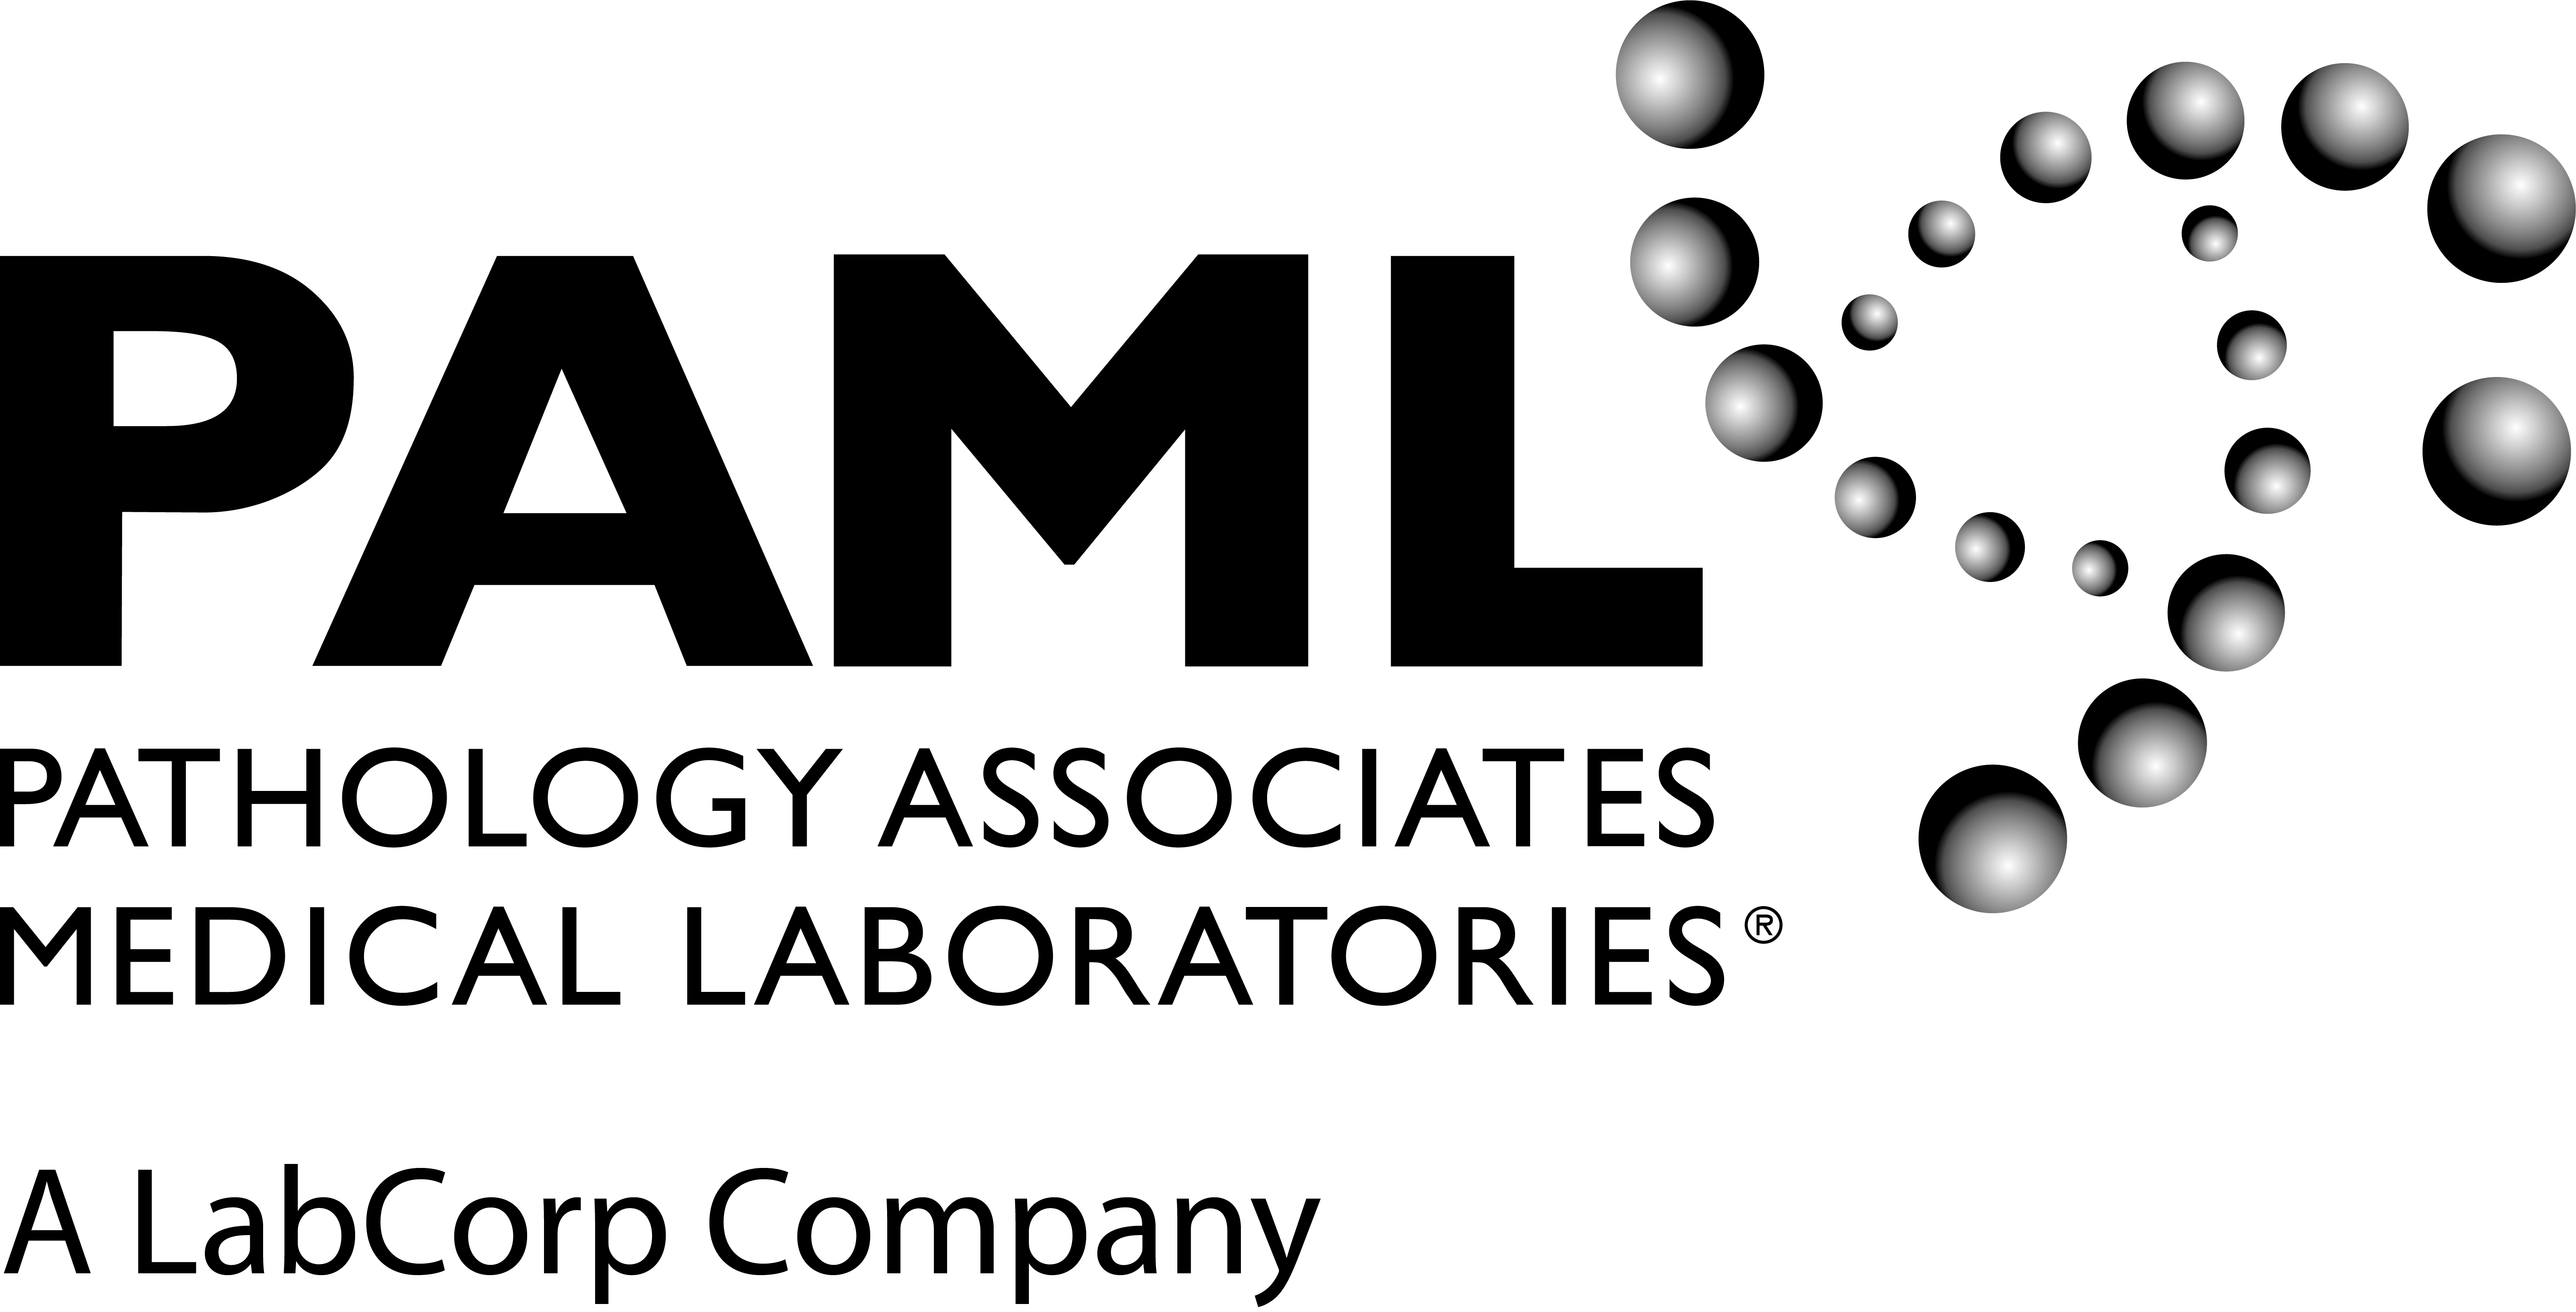 LabCorp Logo - PAML | Pathology Associates Medical Laboratories